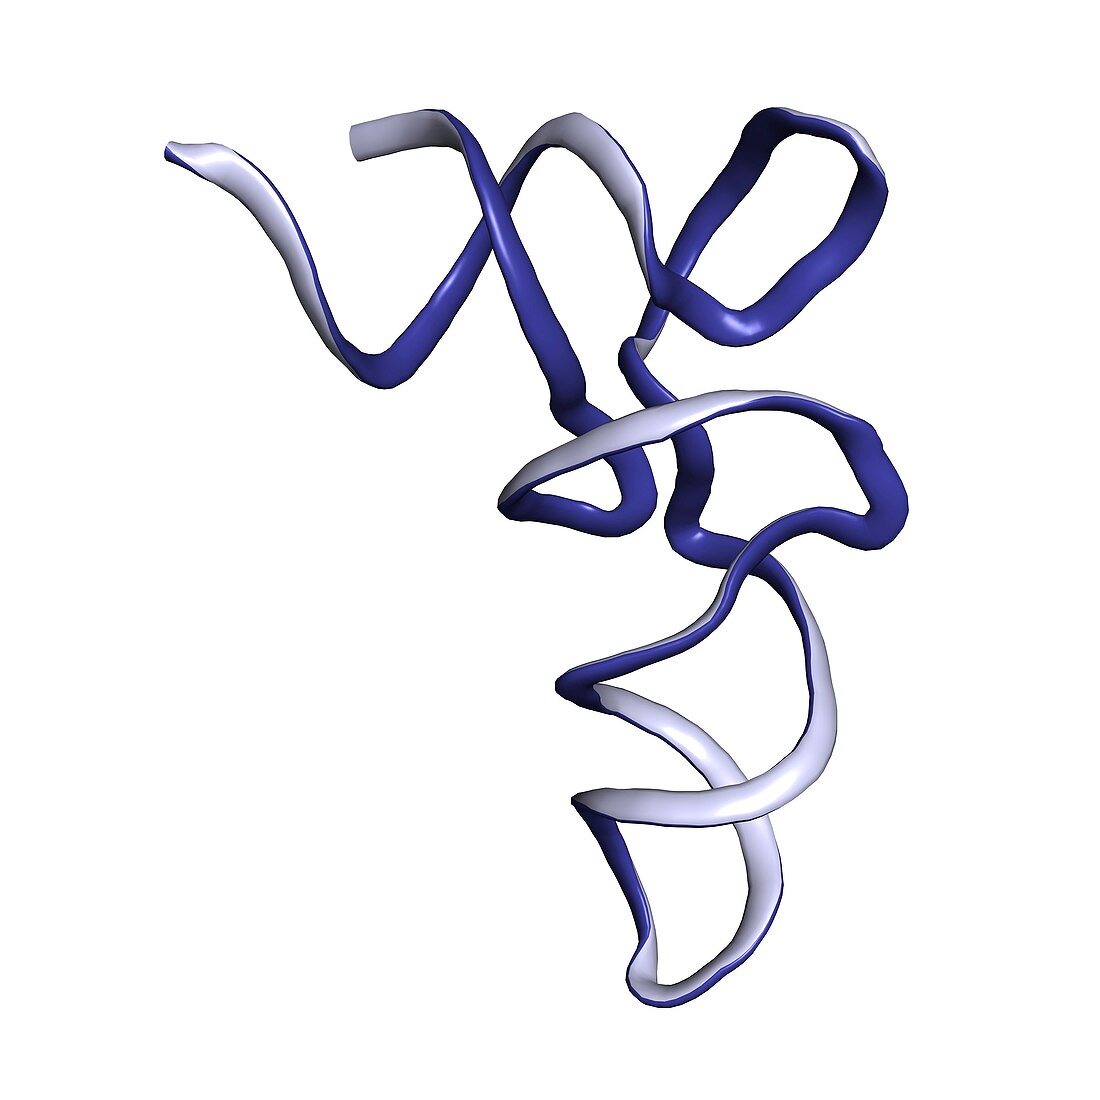 tRNA molecule